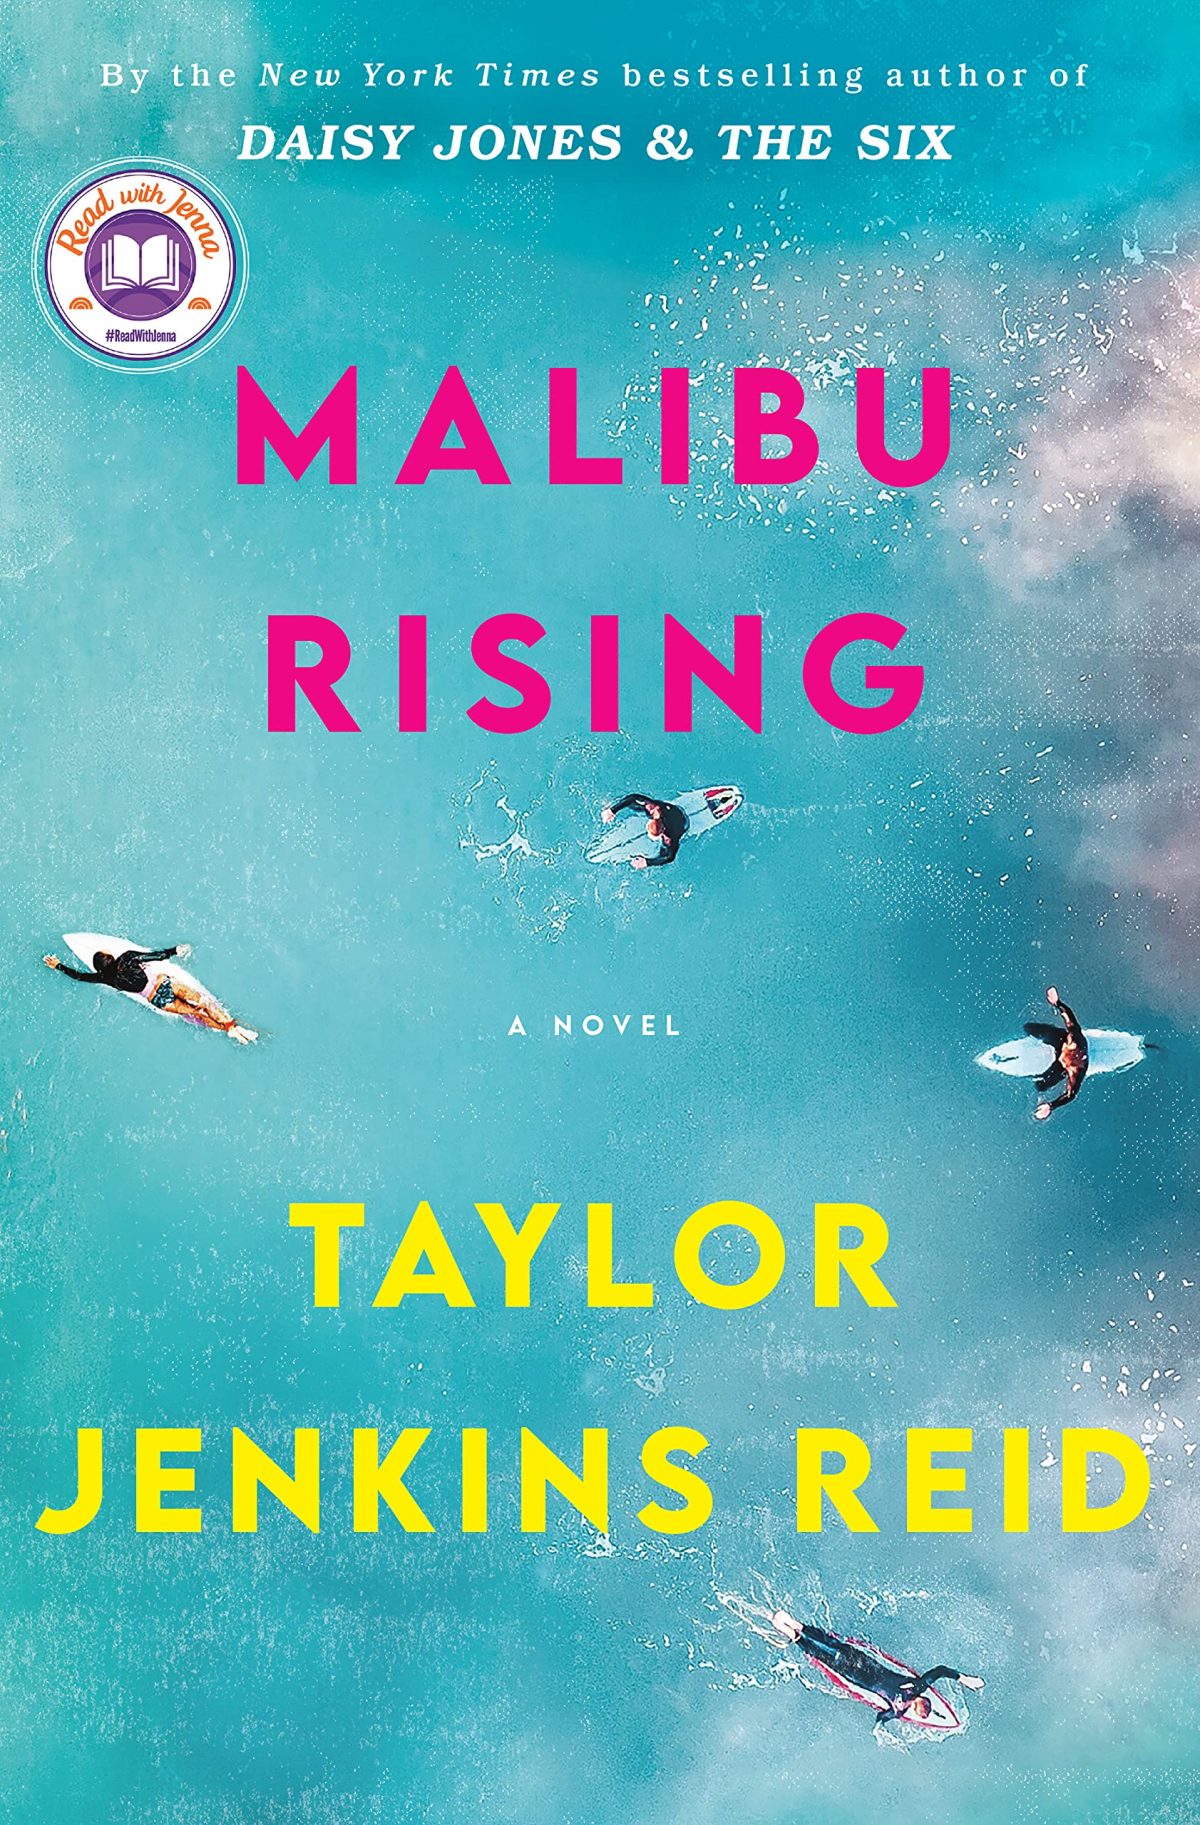 Book 167 – Malibu Rising by Taylor Jenkins Reid